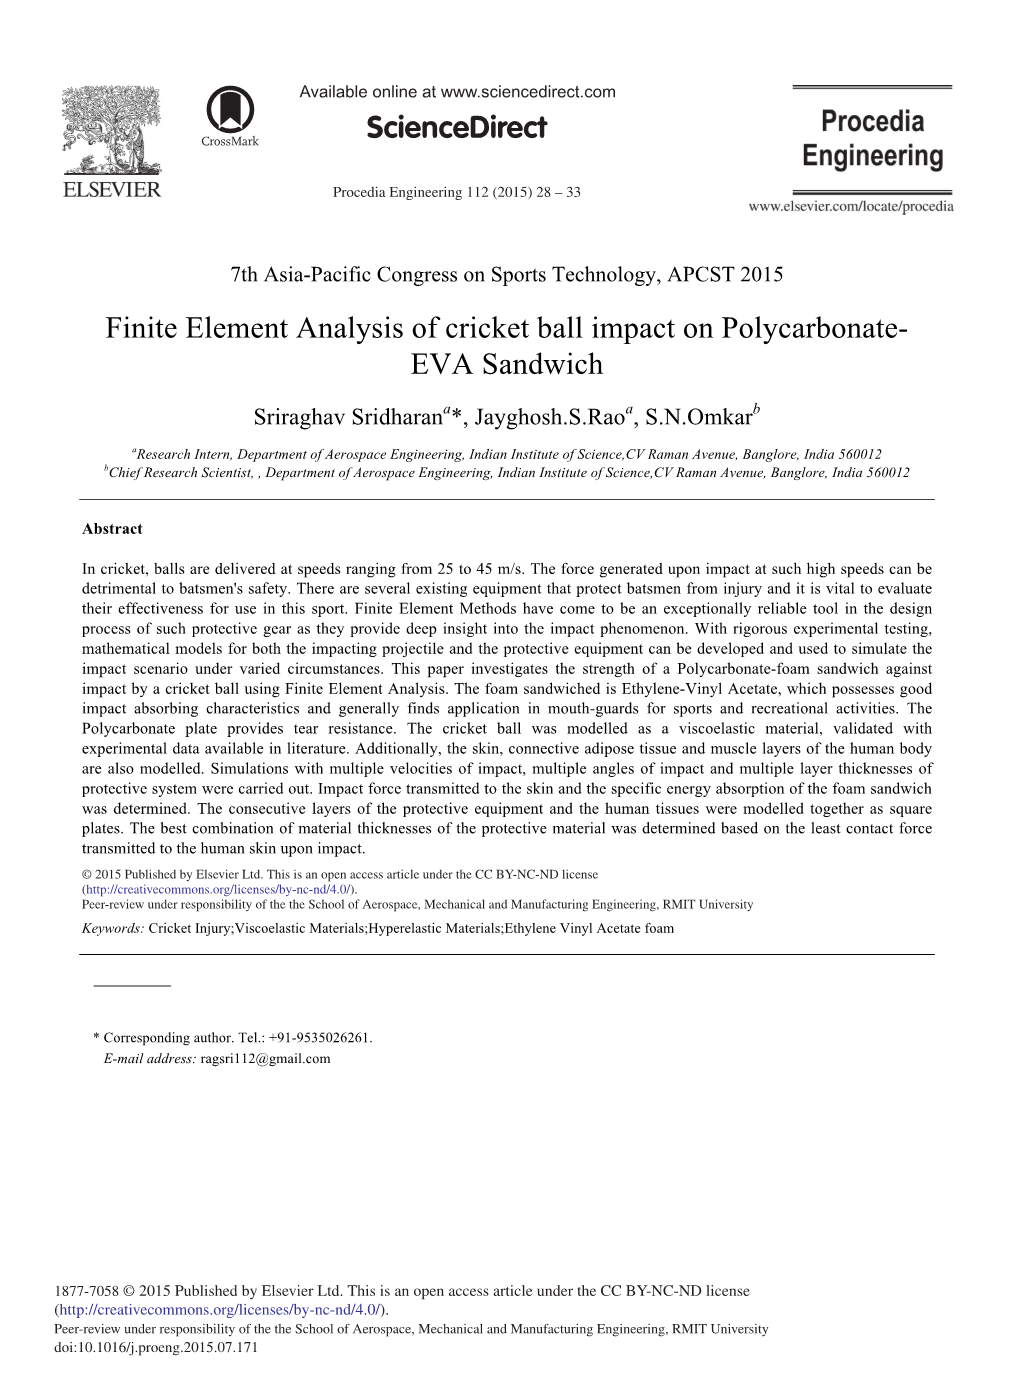 Finite Element Analysis of Cricket Ball Impact on Polycarbonate-EVA